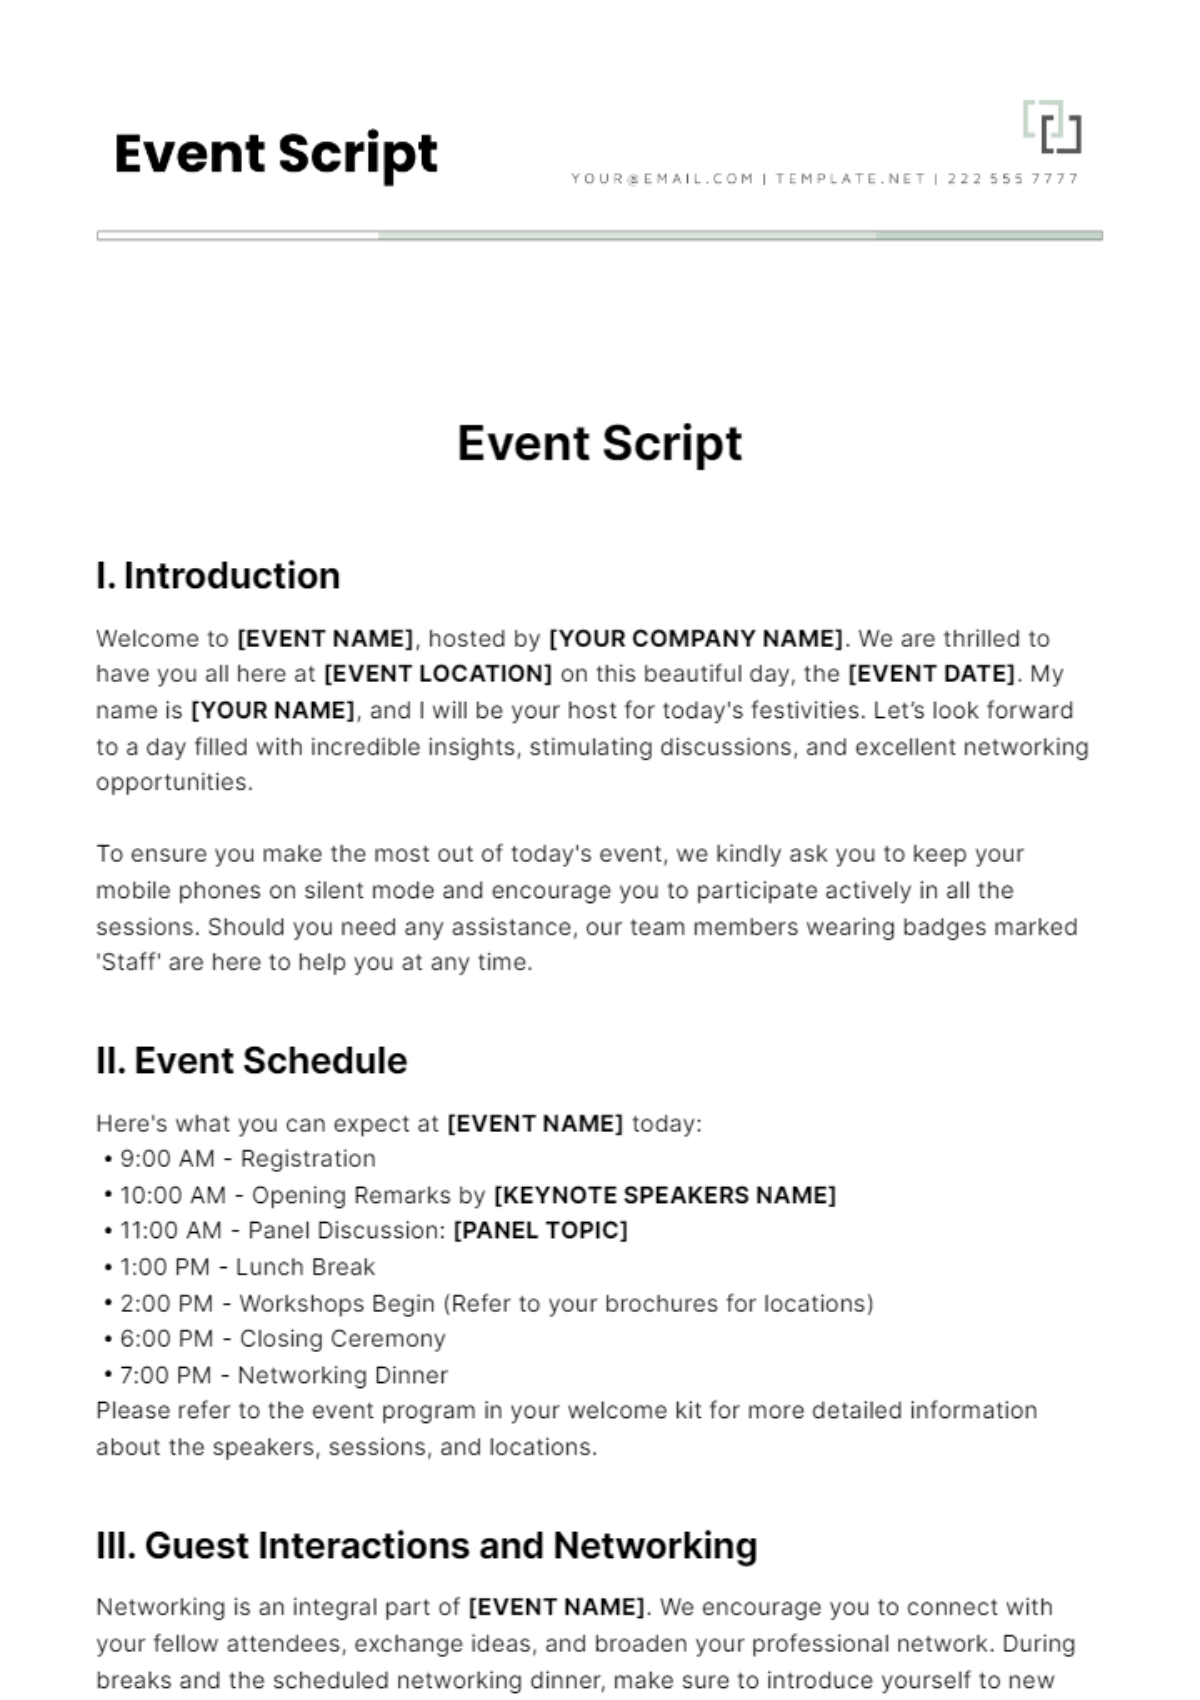 Event Script Template